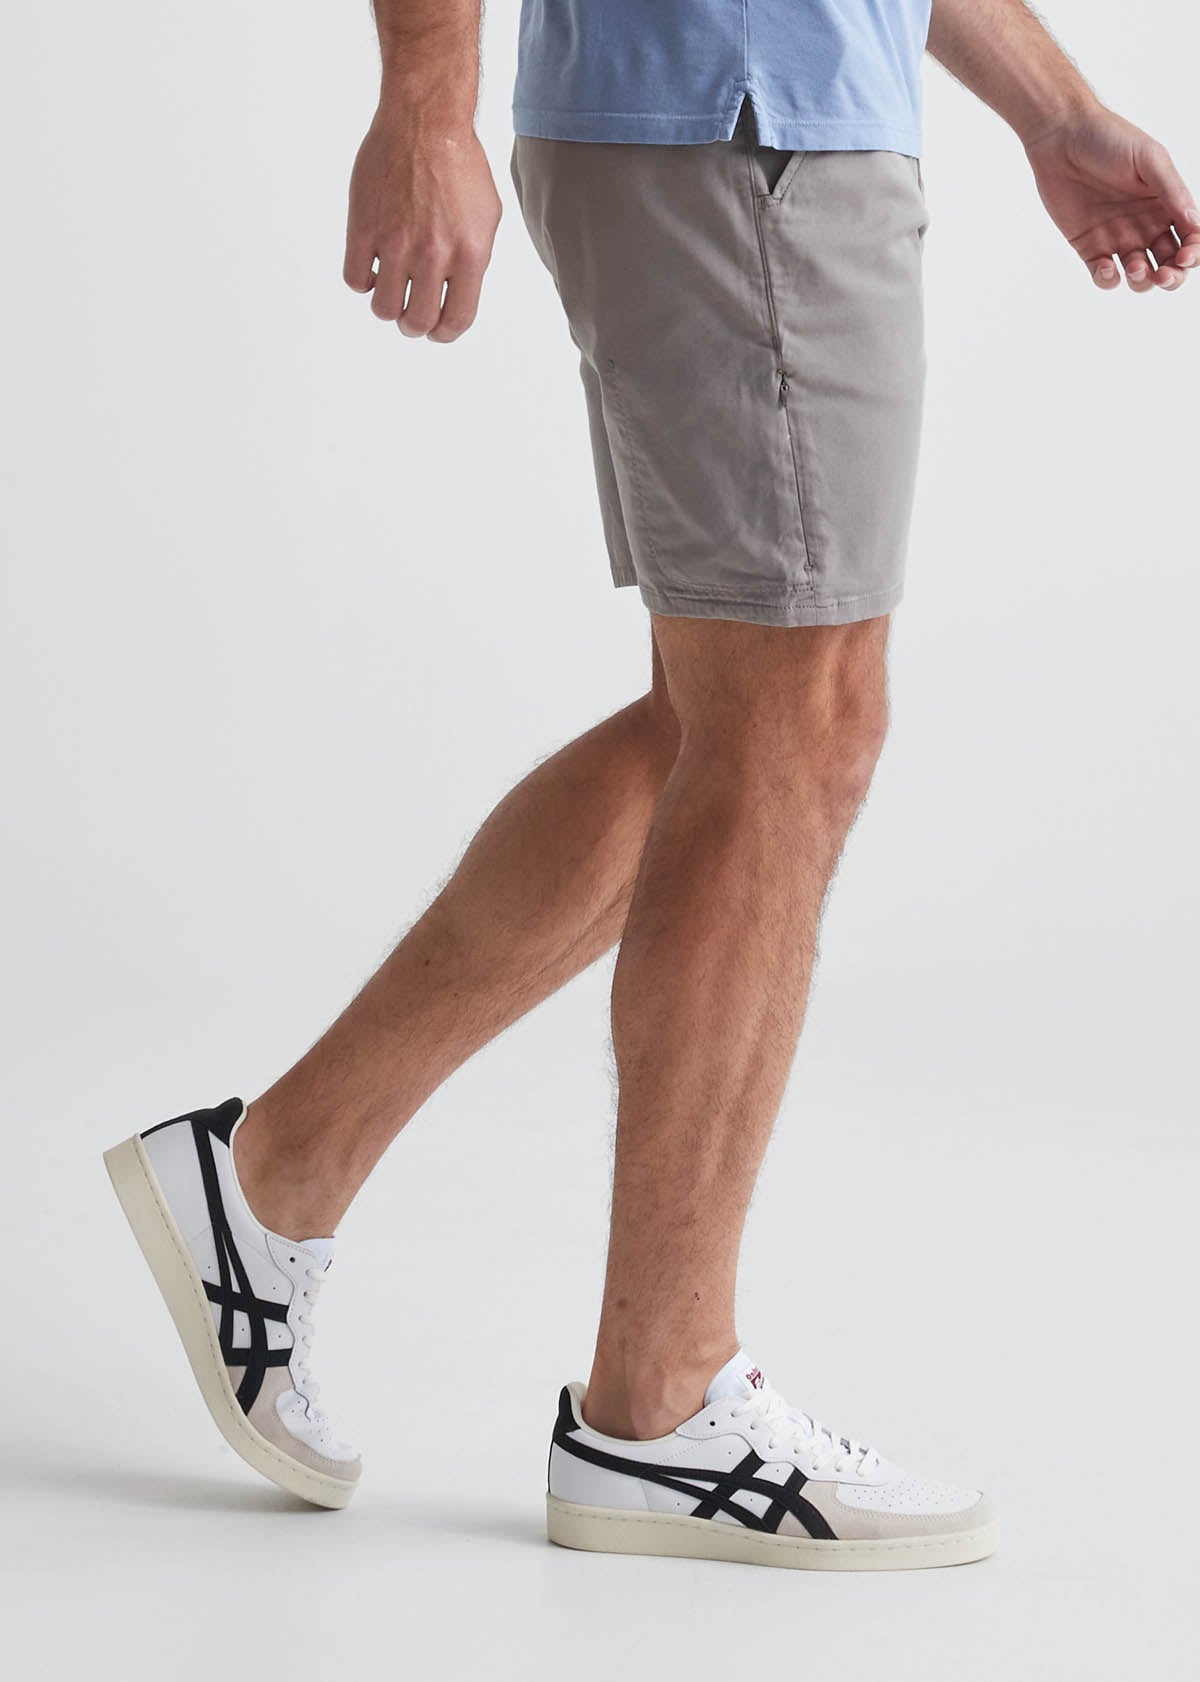 mens lightweight light grey shorts side 7" inseam